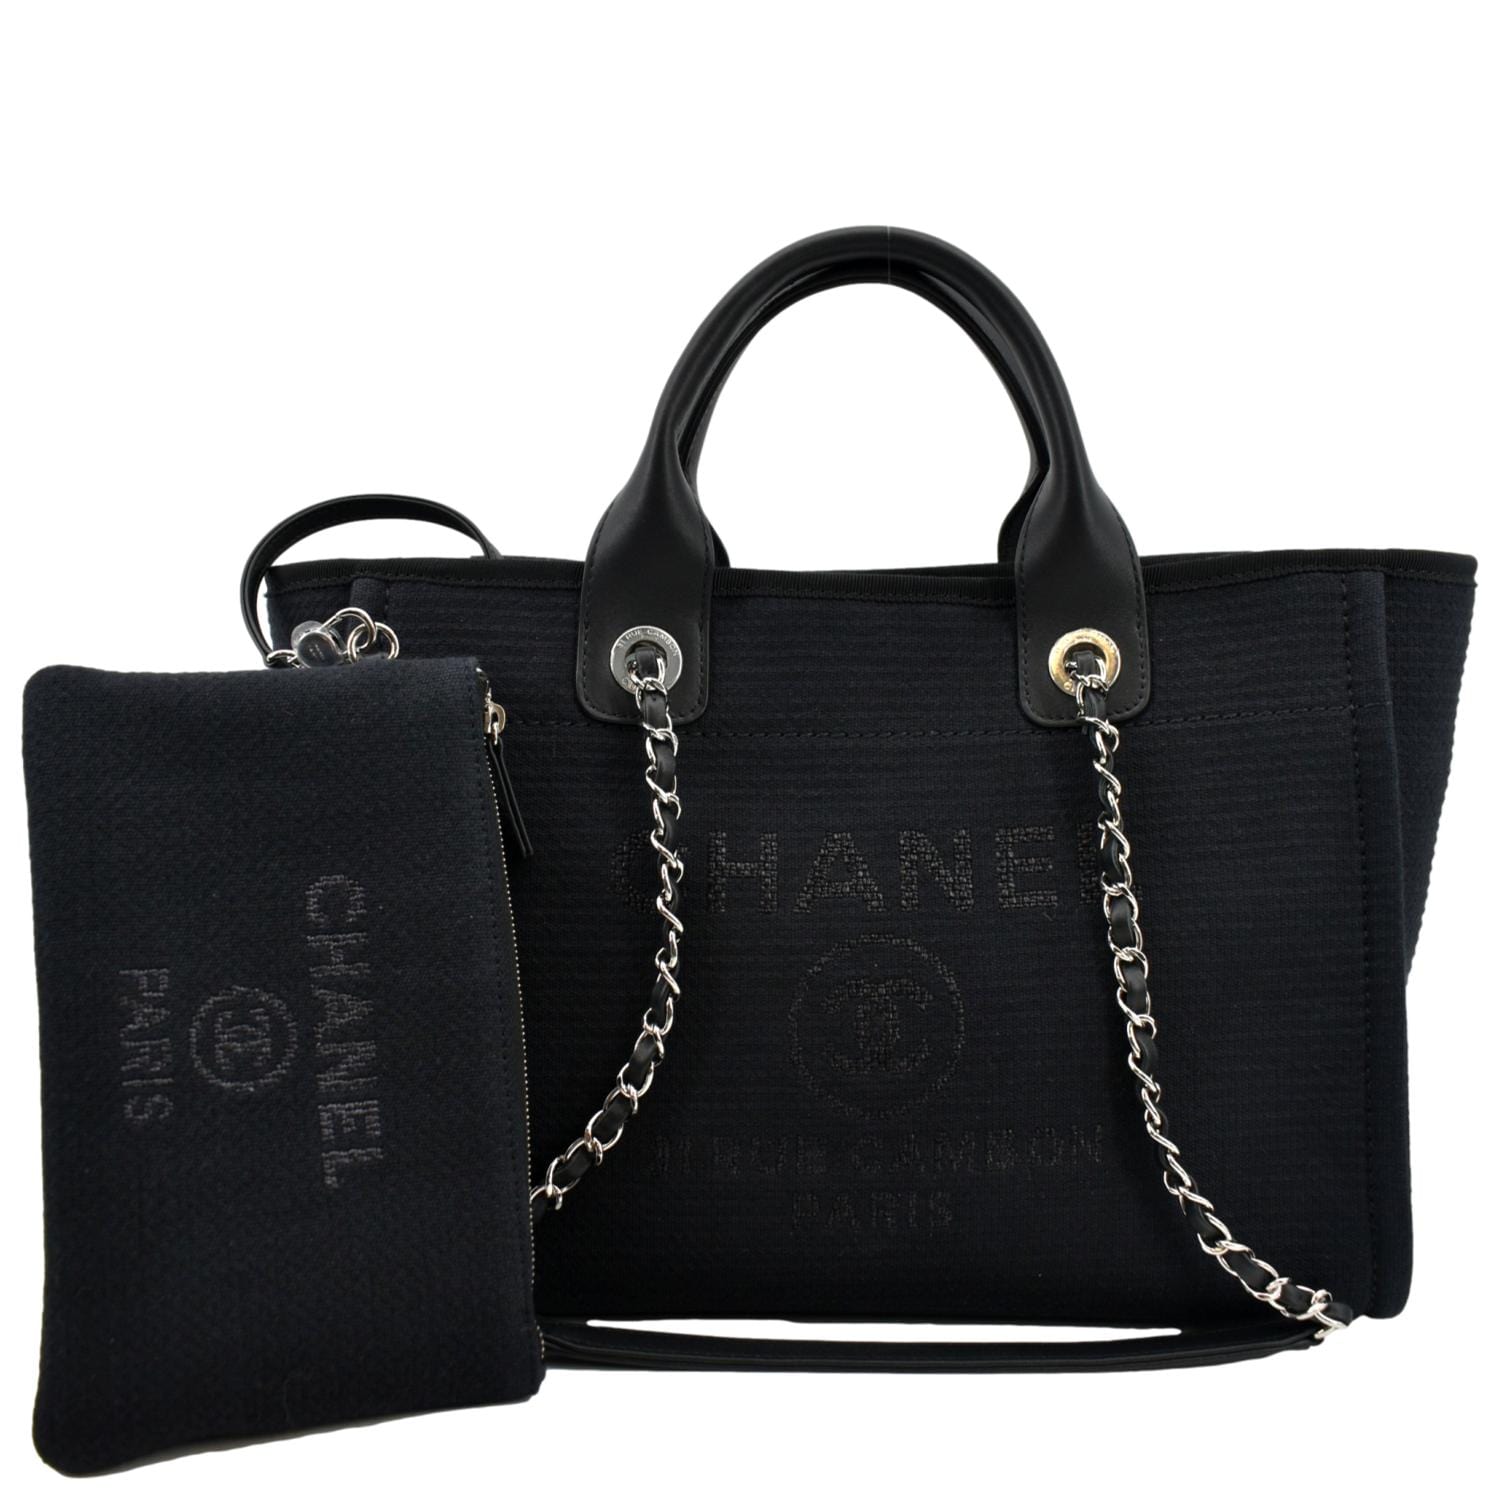 Handbags Chanel Chanel Deauville